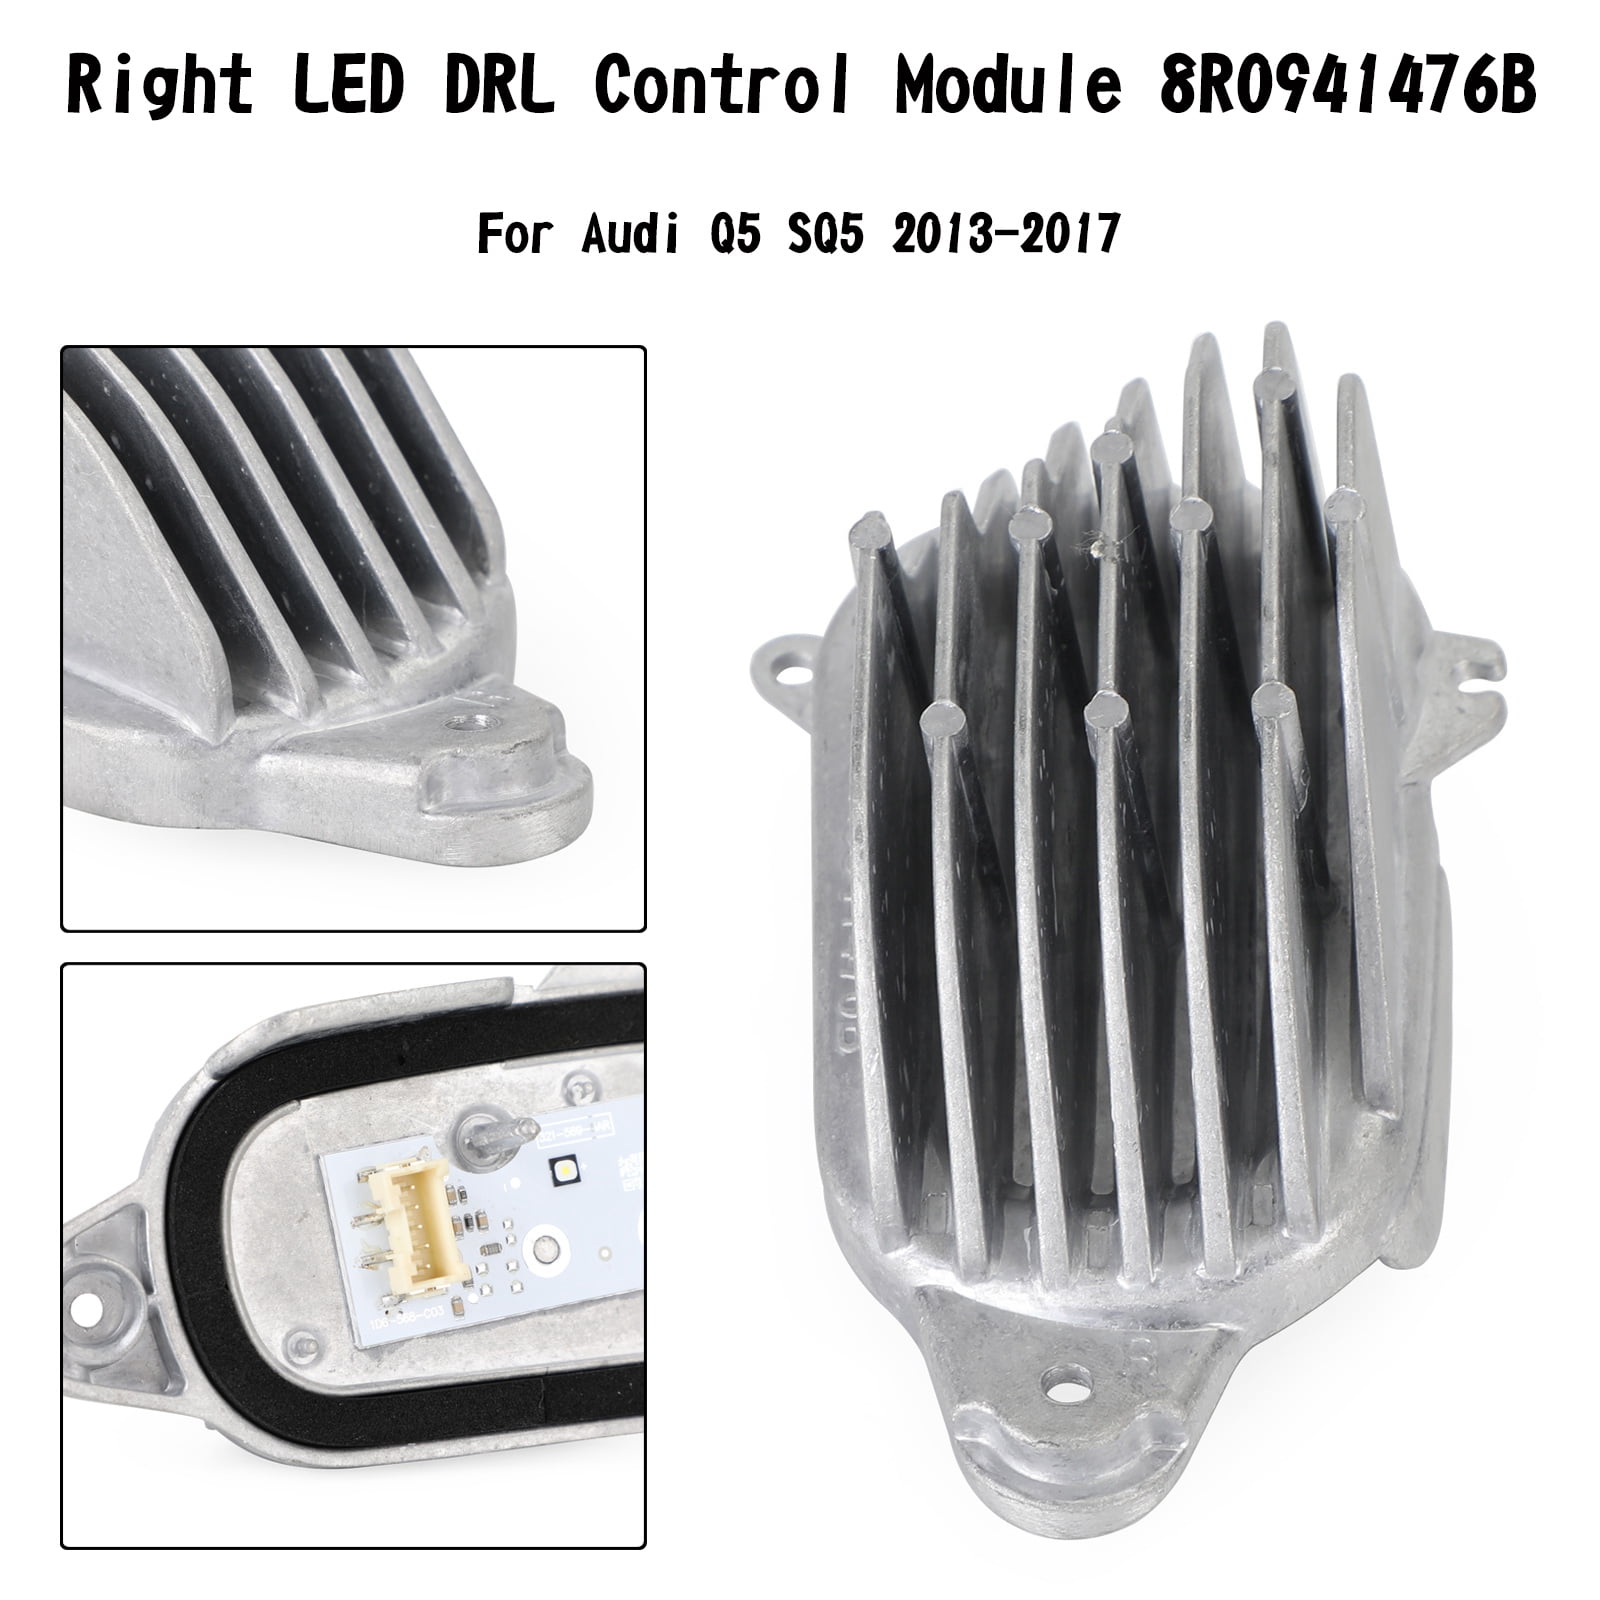 Right LED DRL Control Module 8R0941476B For Audi Q5 SQ5 2013-2017